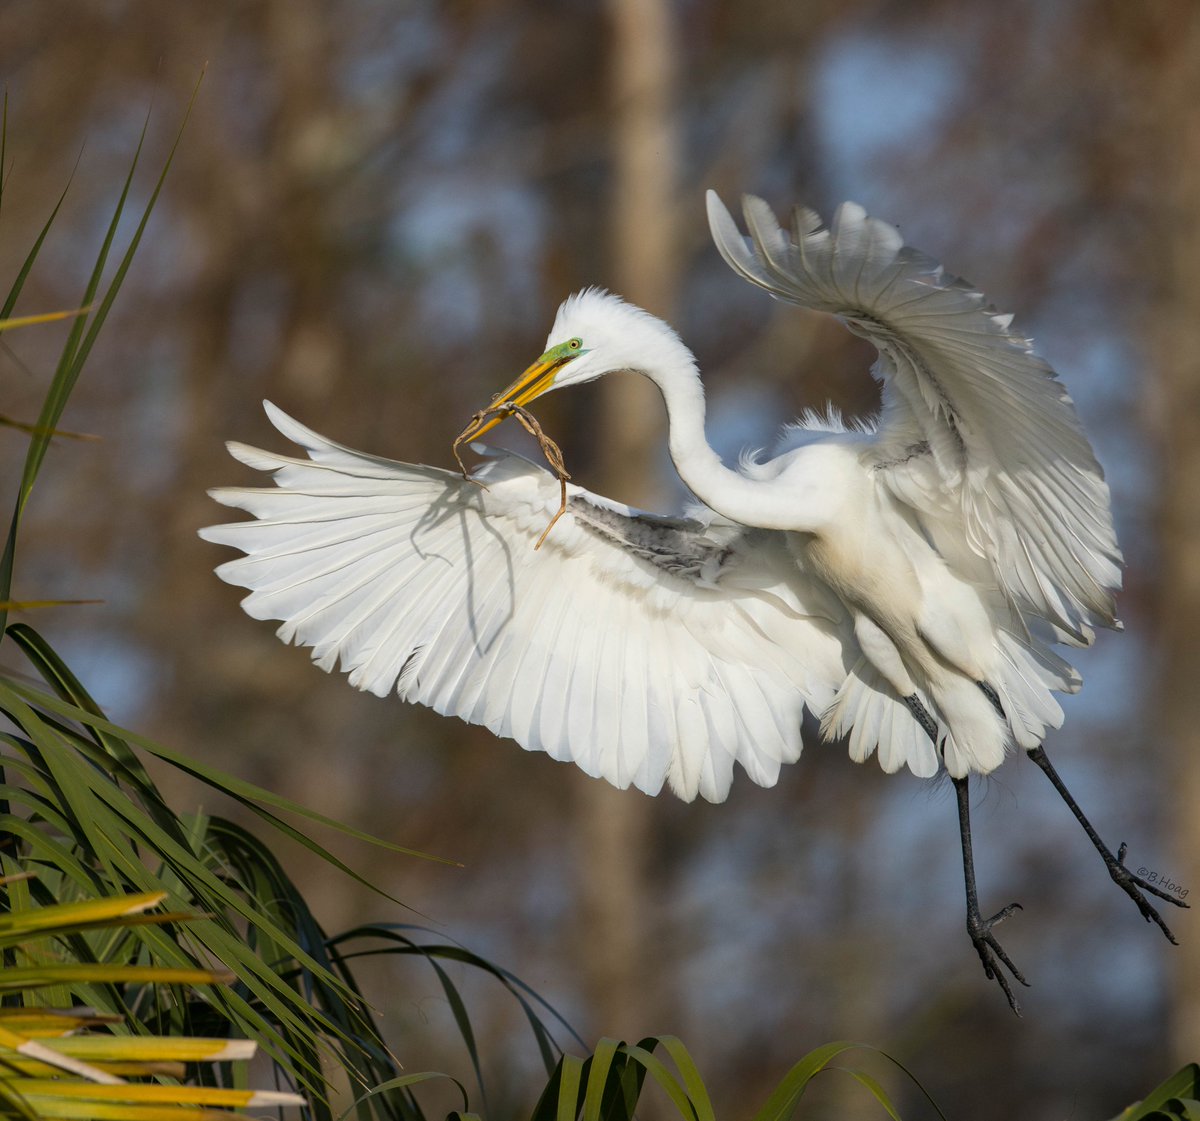 A Great Egret with nesting materials.

#twitternaturecommunity #bird #thingsoutside #naturephotography #birdphotography #wildlife #nature #twitterbirds #bird #birding #BBCWildlifePOTD #natgeowild
#birdsfeather #audubon #floridabirds